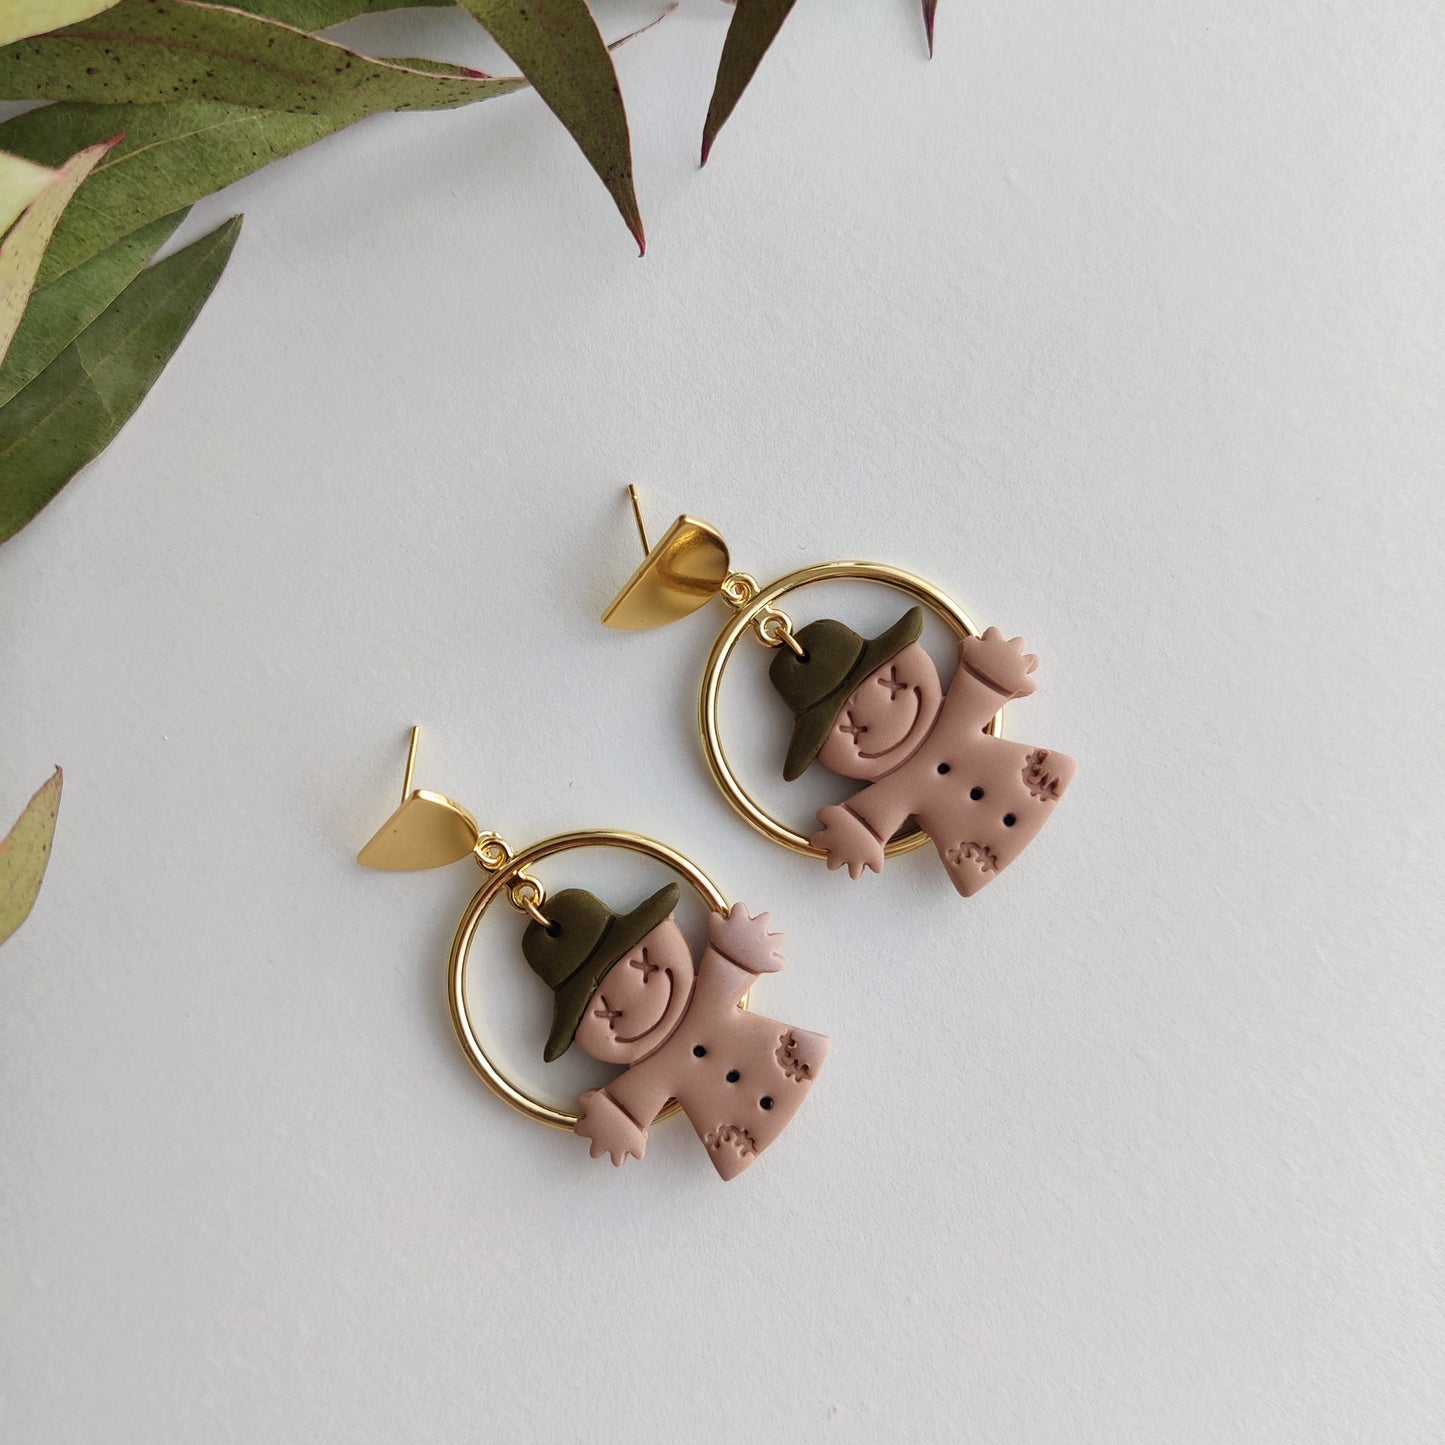 Autumn Collection | Autumn Earrings | Handmade Halloween polymer clay earrings | Fall foliage earrings | Fall colors earrings | Cosy